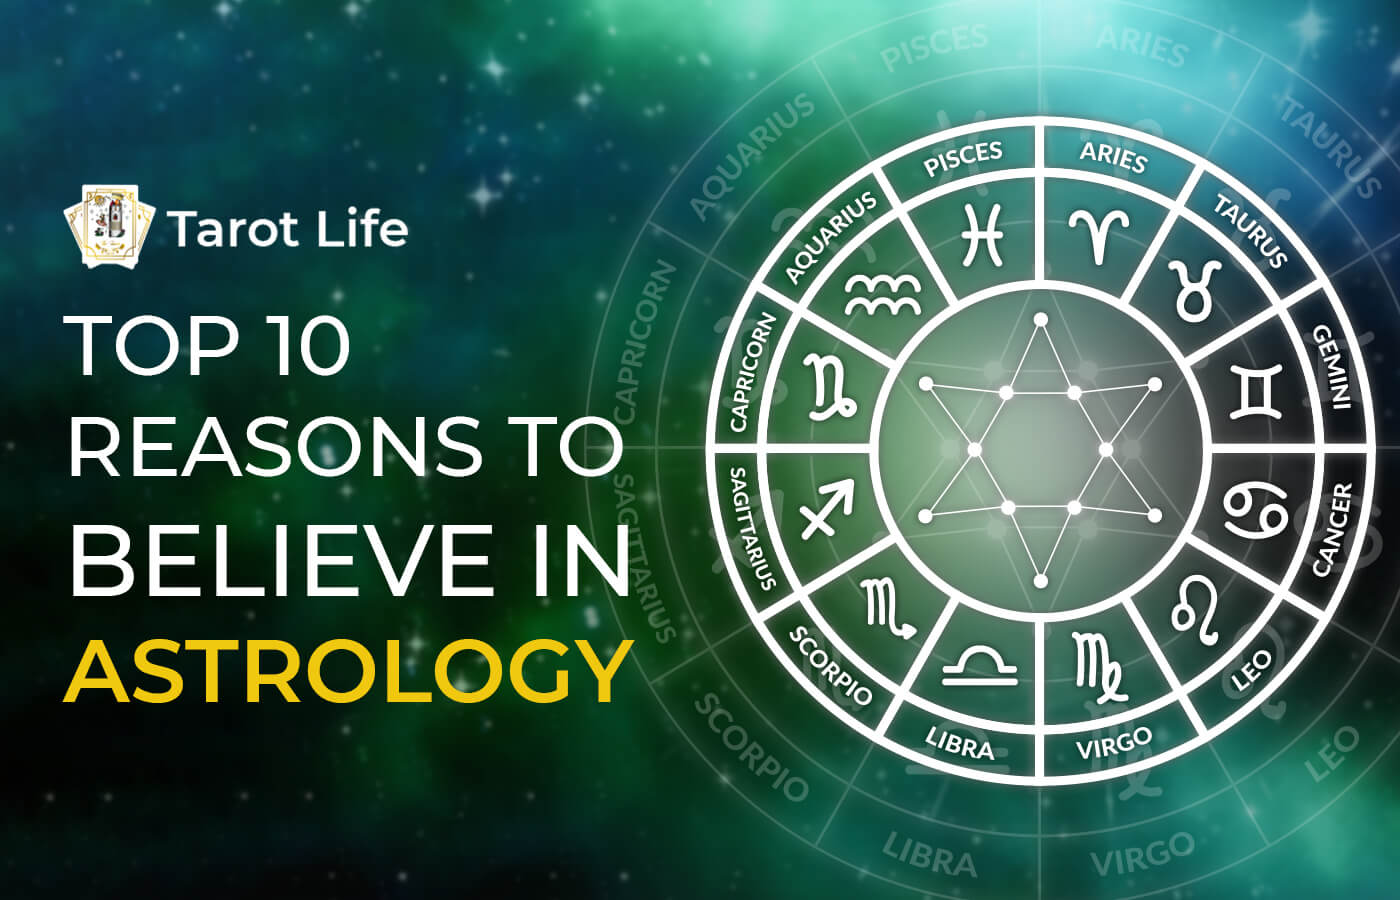 Should we believe in horoscope?